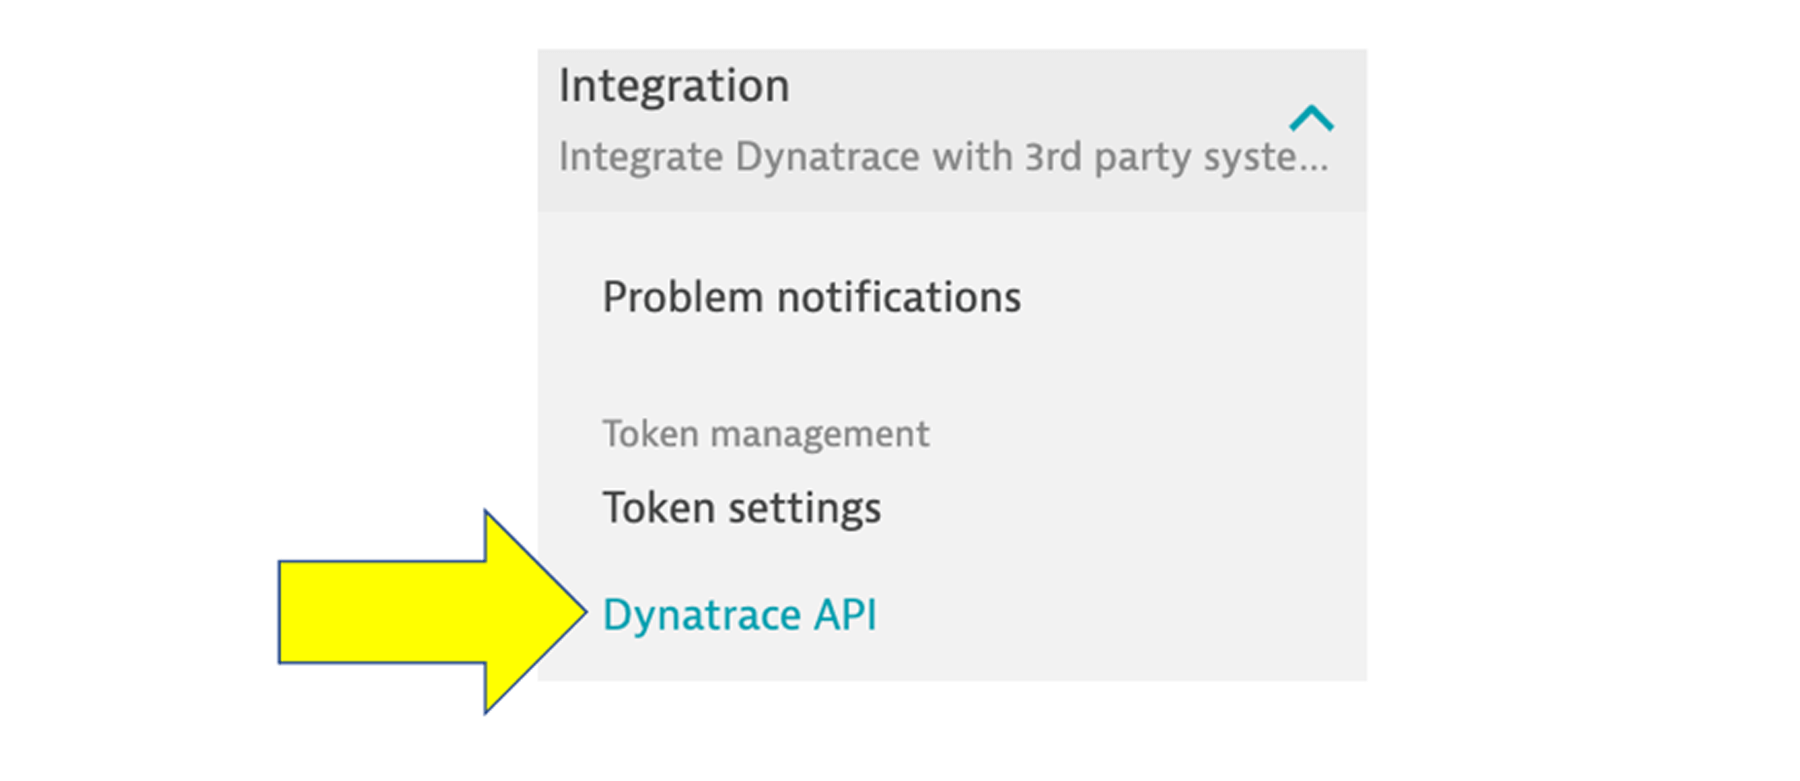 Dynatrace API under Token settings